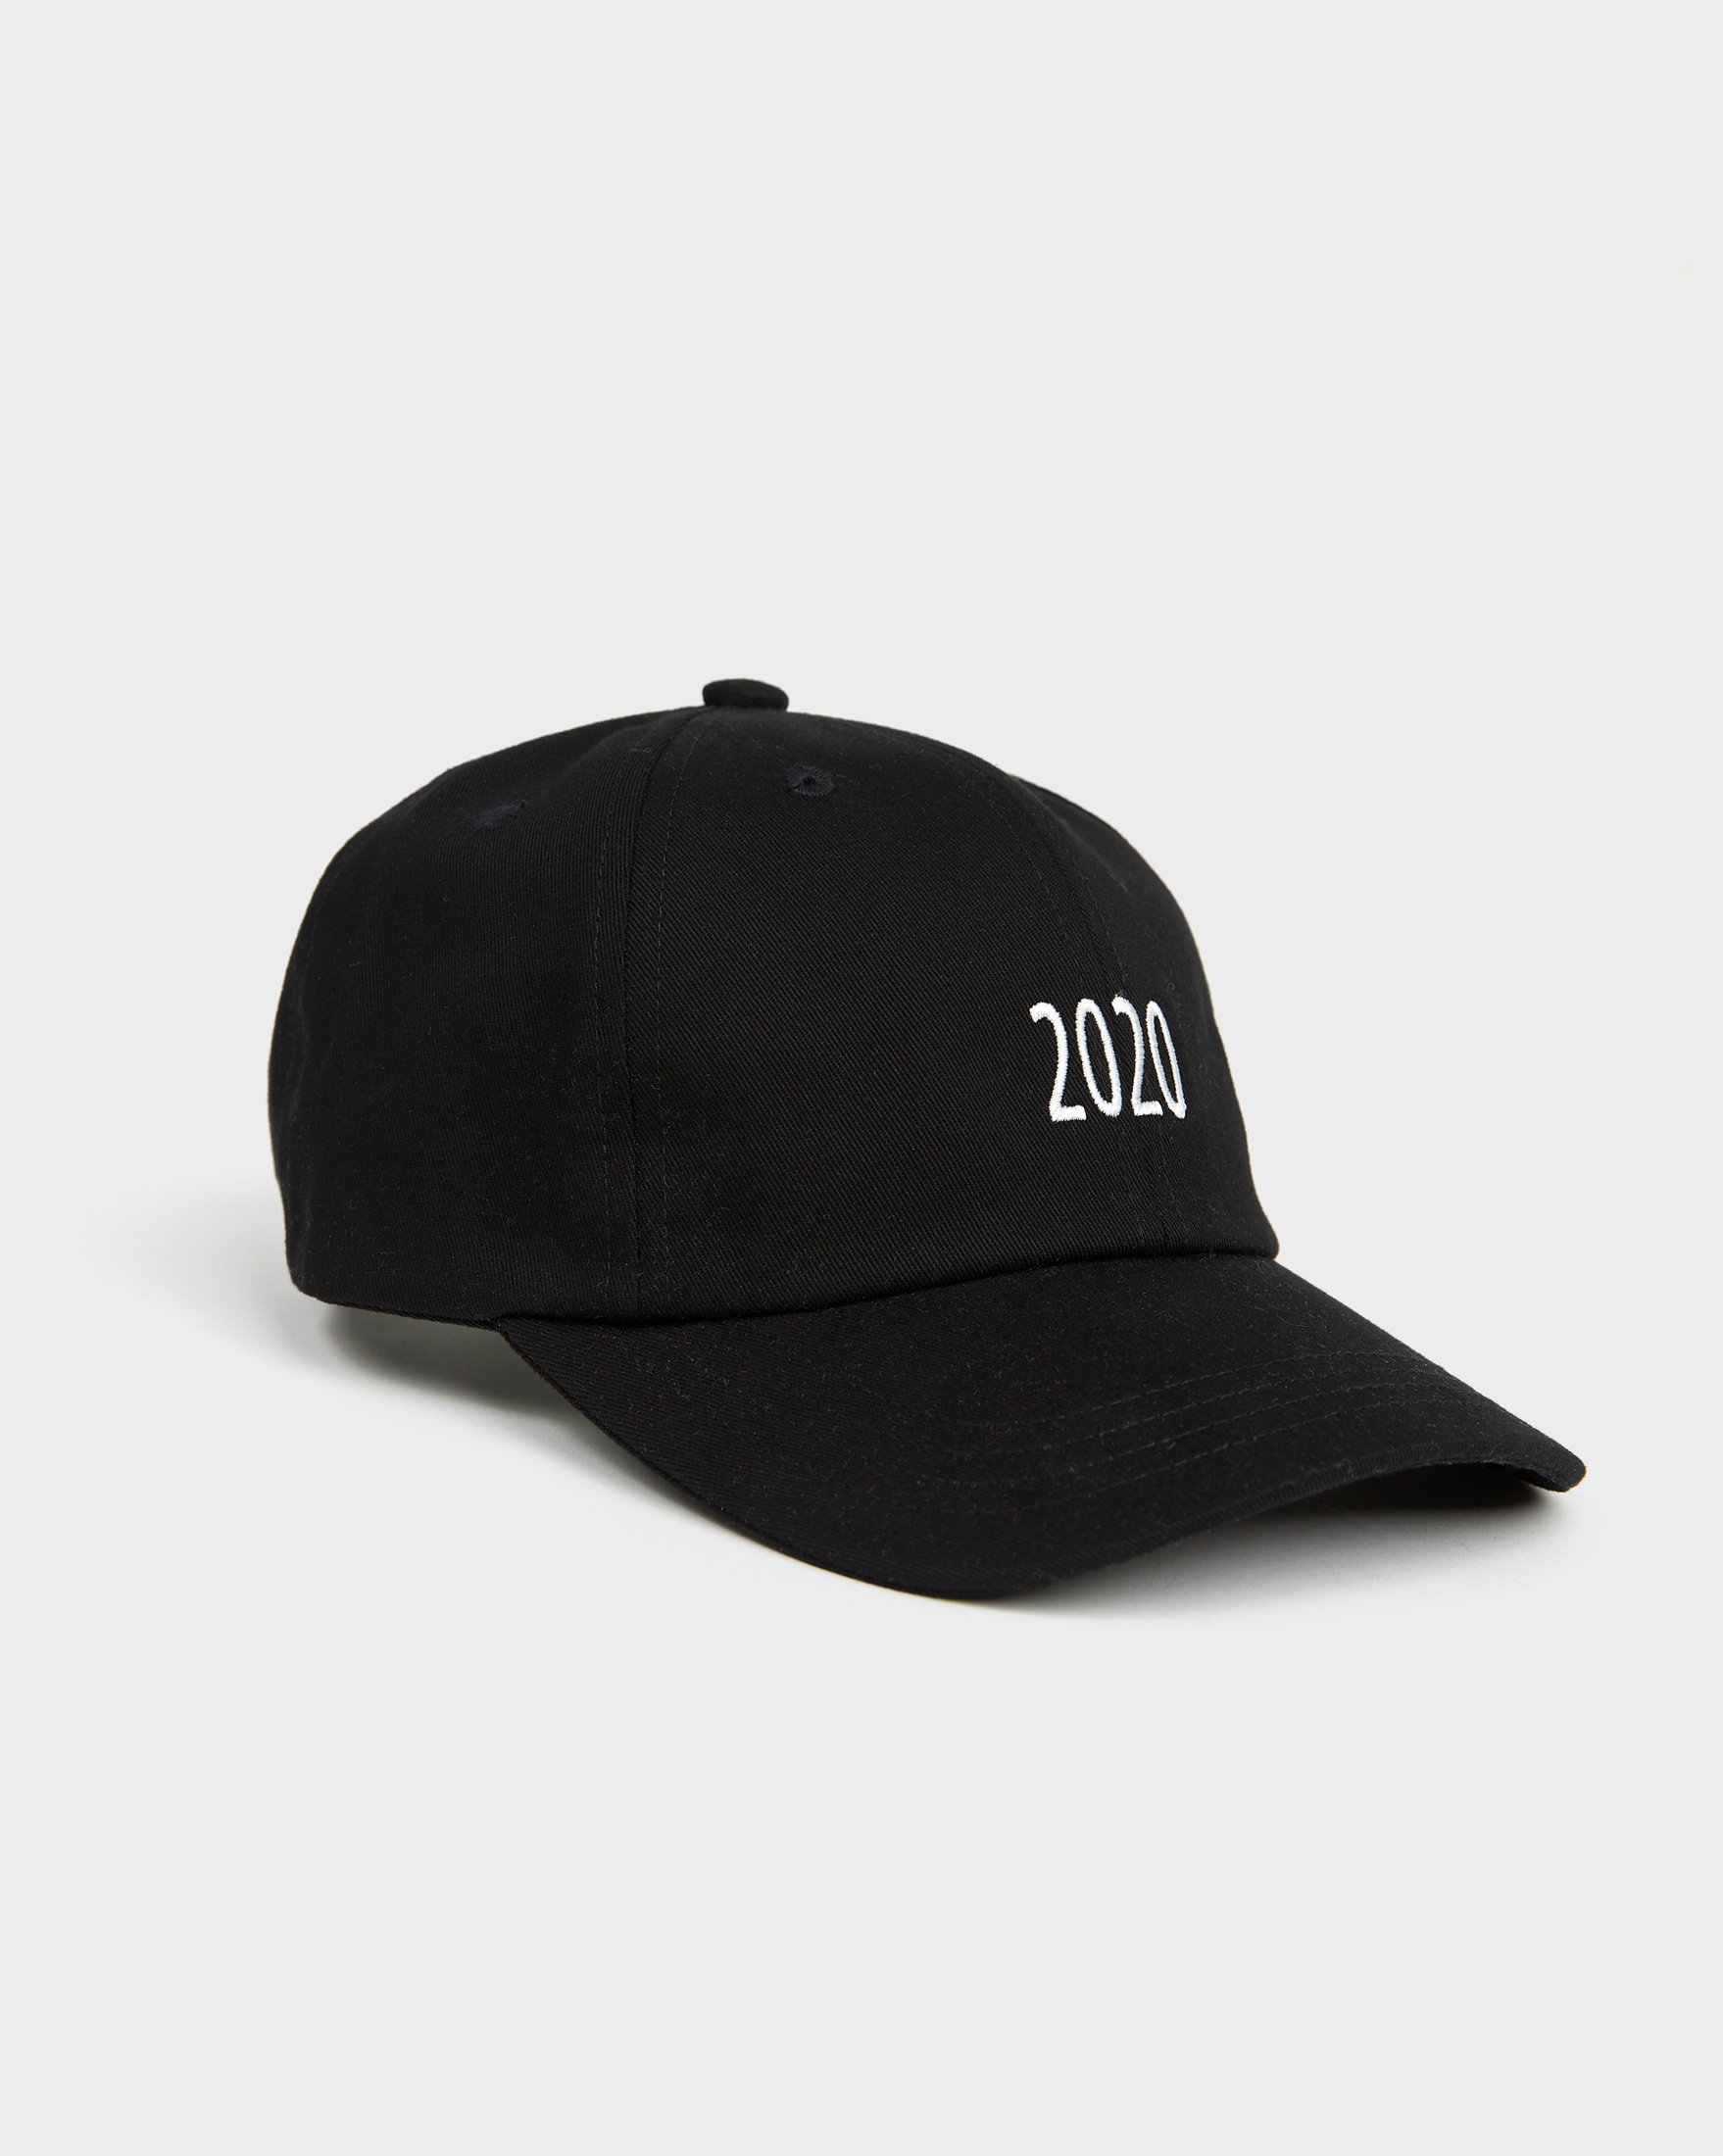 Highsnobiety - This Never Happened 2020 Cap Black - Caps - Black - Image 1